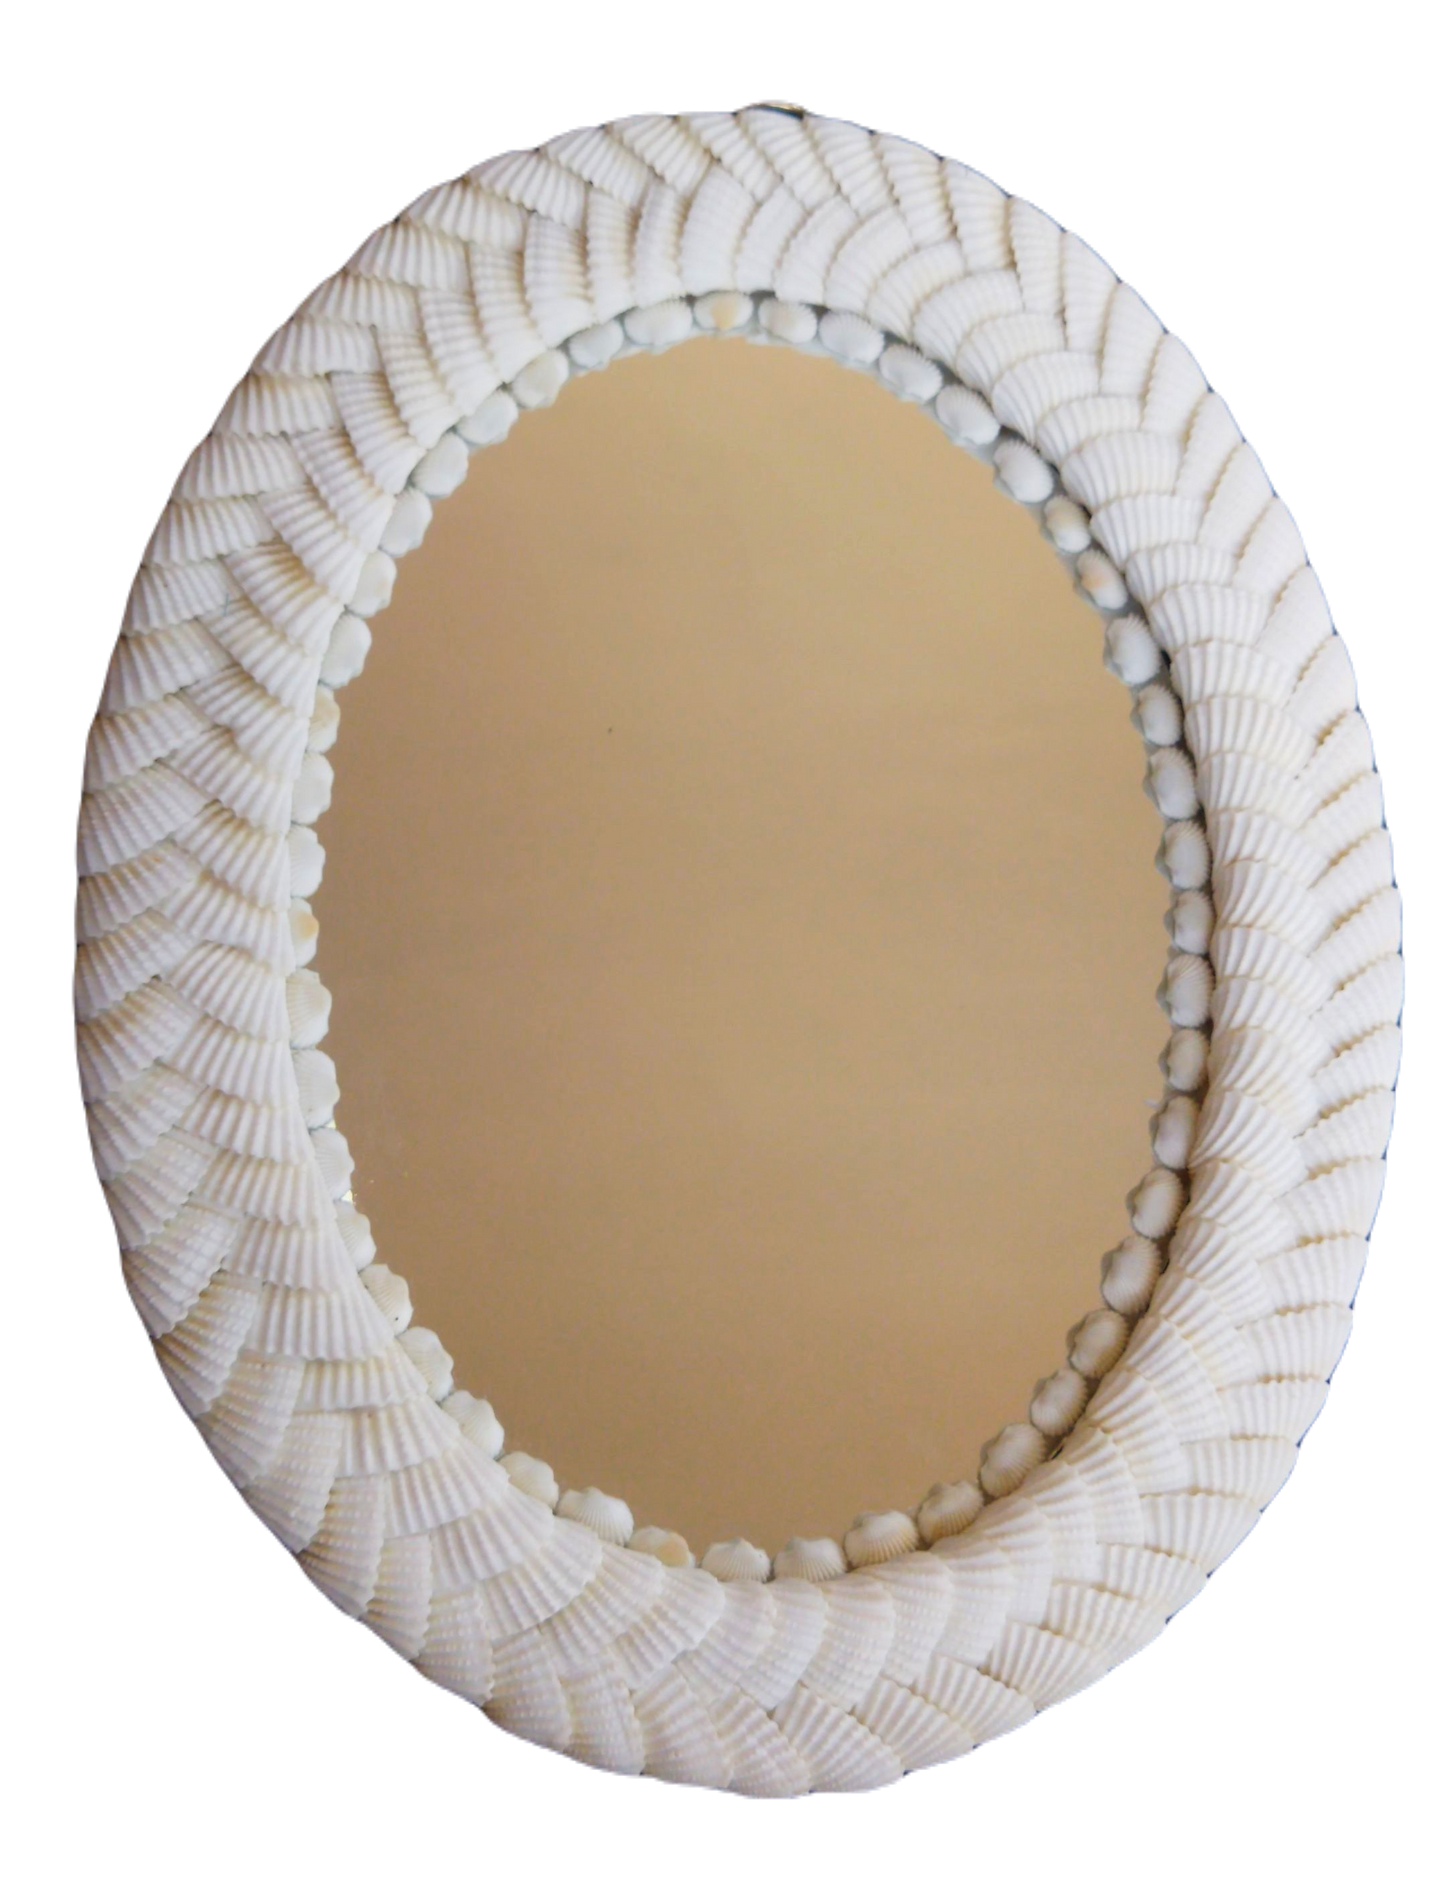 ZENRISE Decorative designer seashell handicraft oval framed wall mirror, 37 cm, White